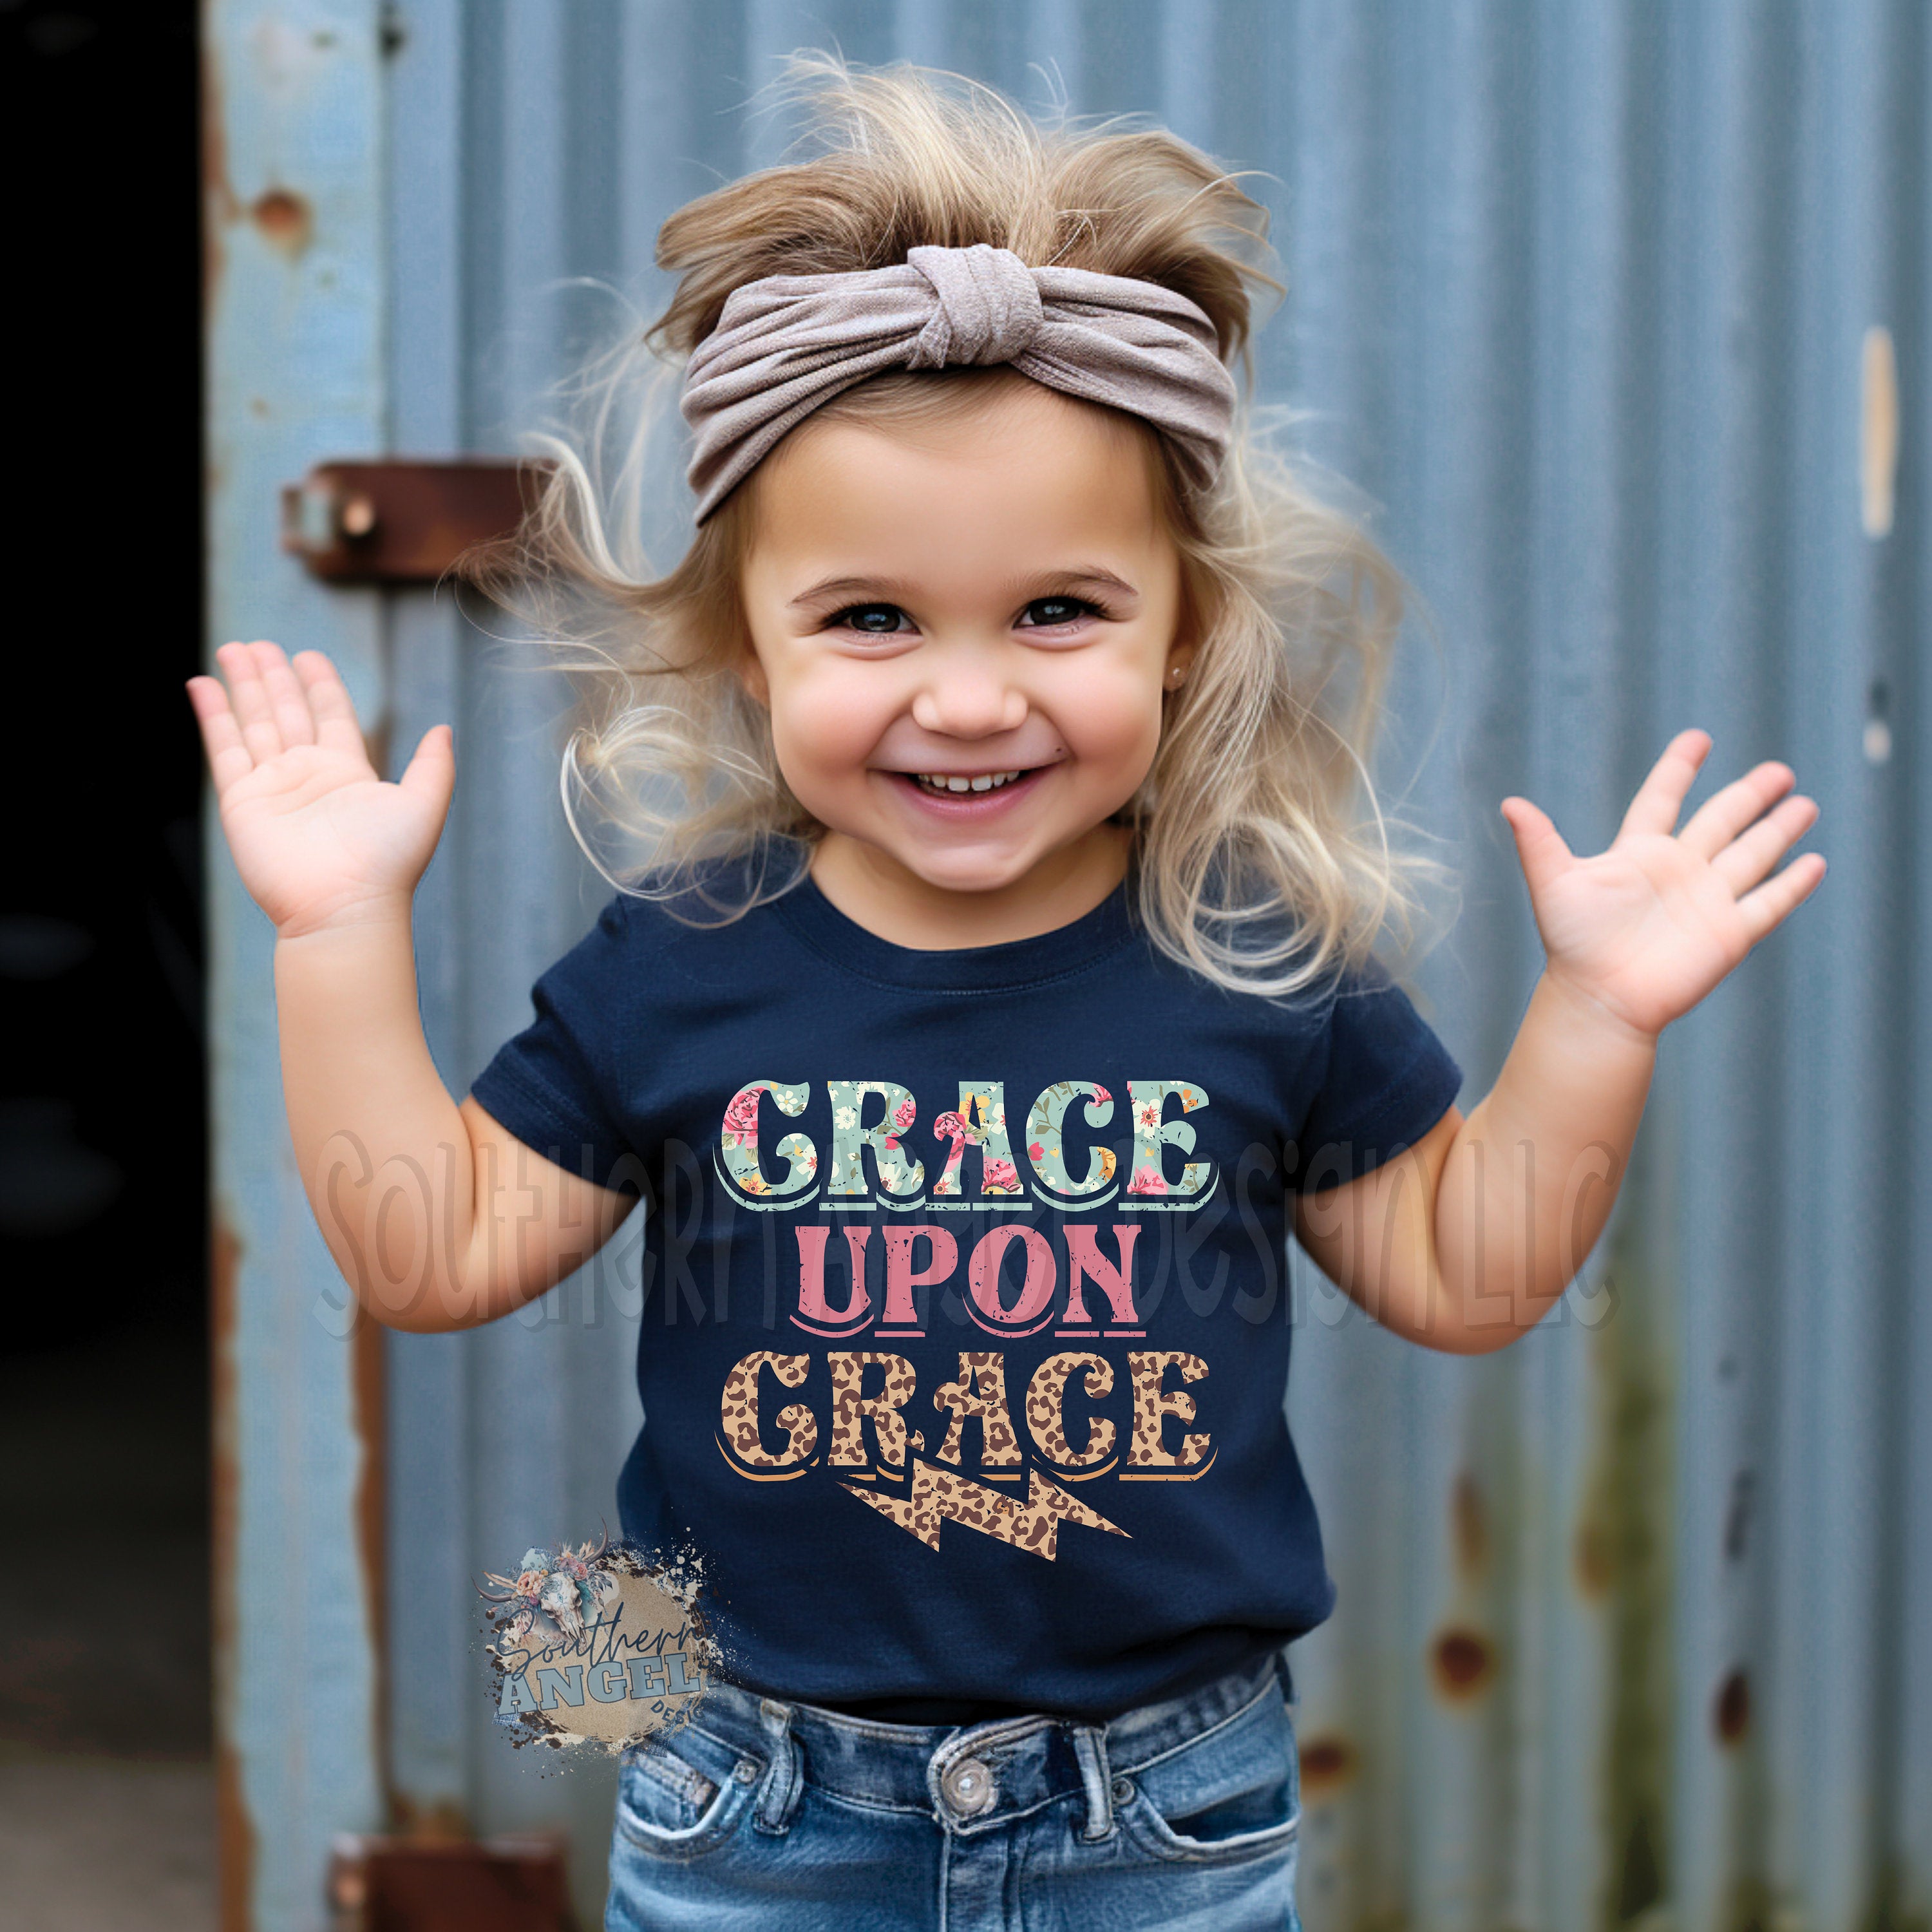 Kids Grace Upon shirt, Faith the size of Texas shirt, Love like Jesus shirt, country girl shirt, Bible verse shirt, kids vbs shirt